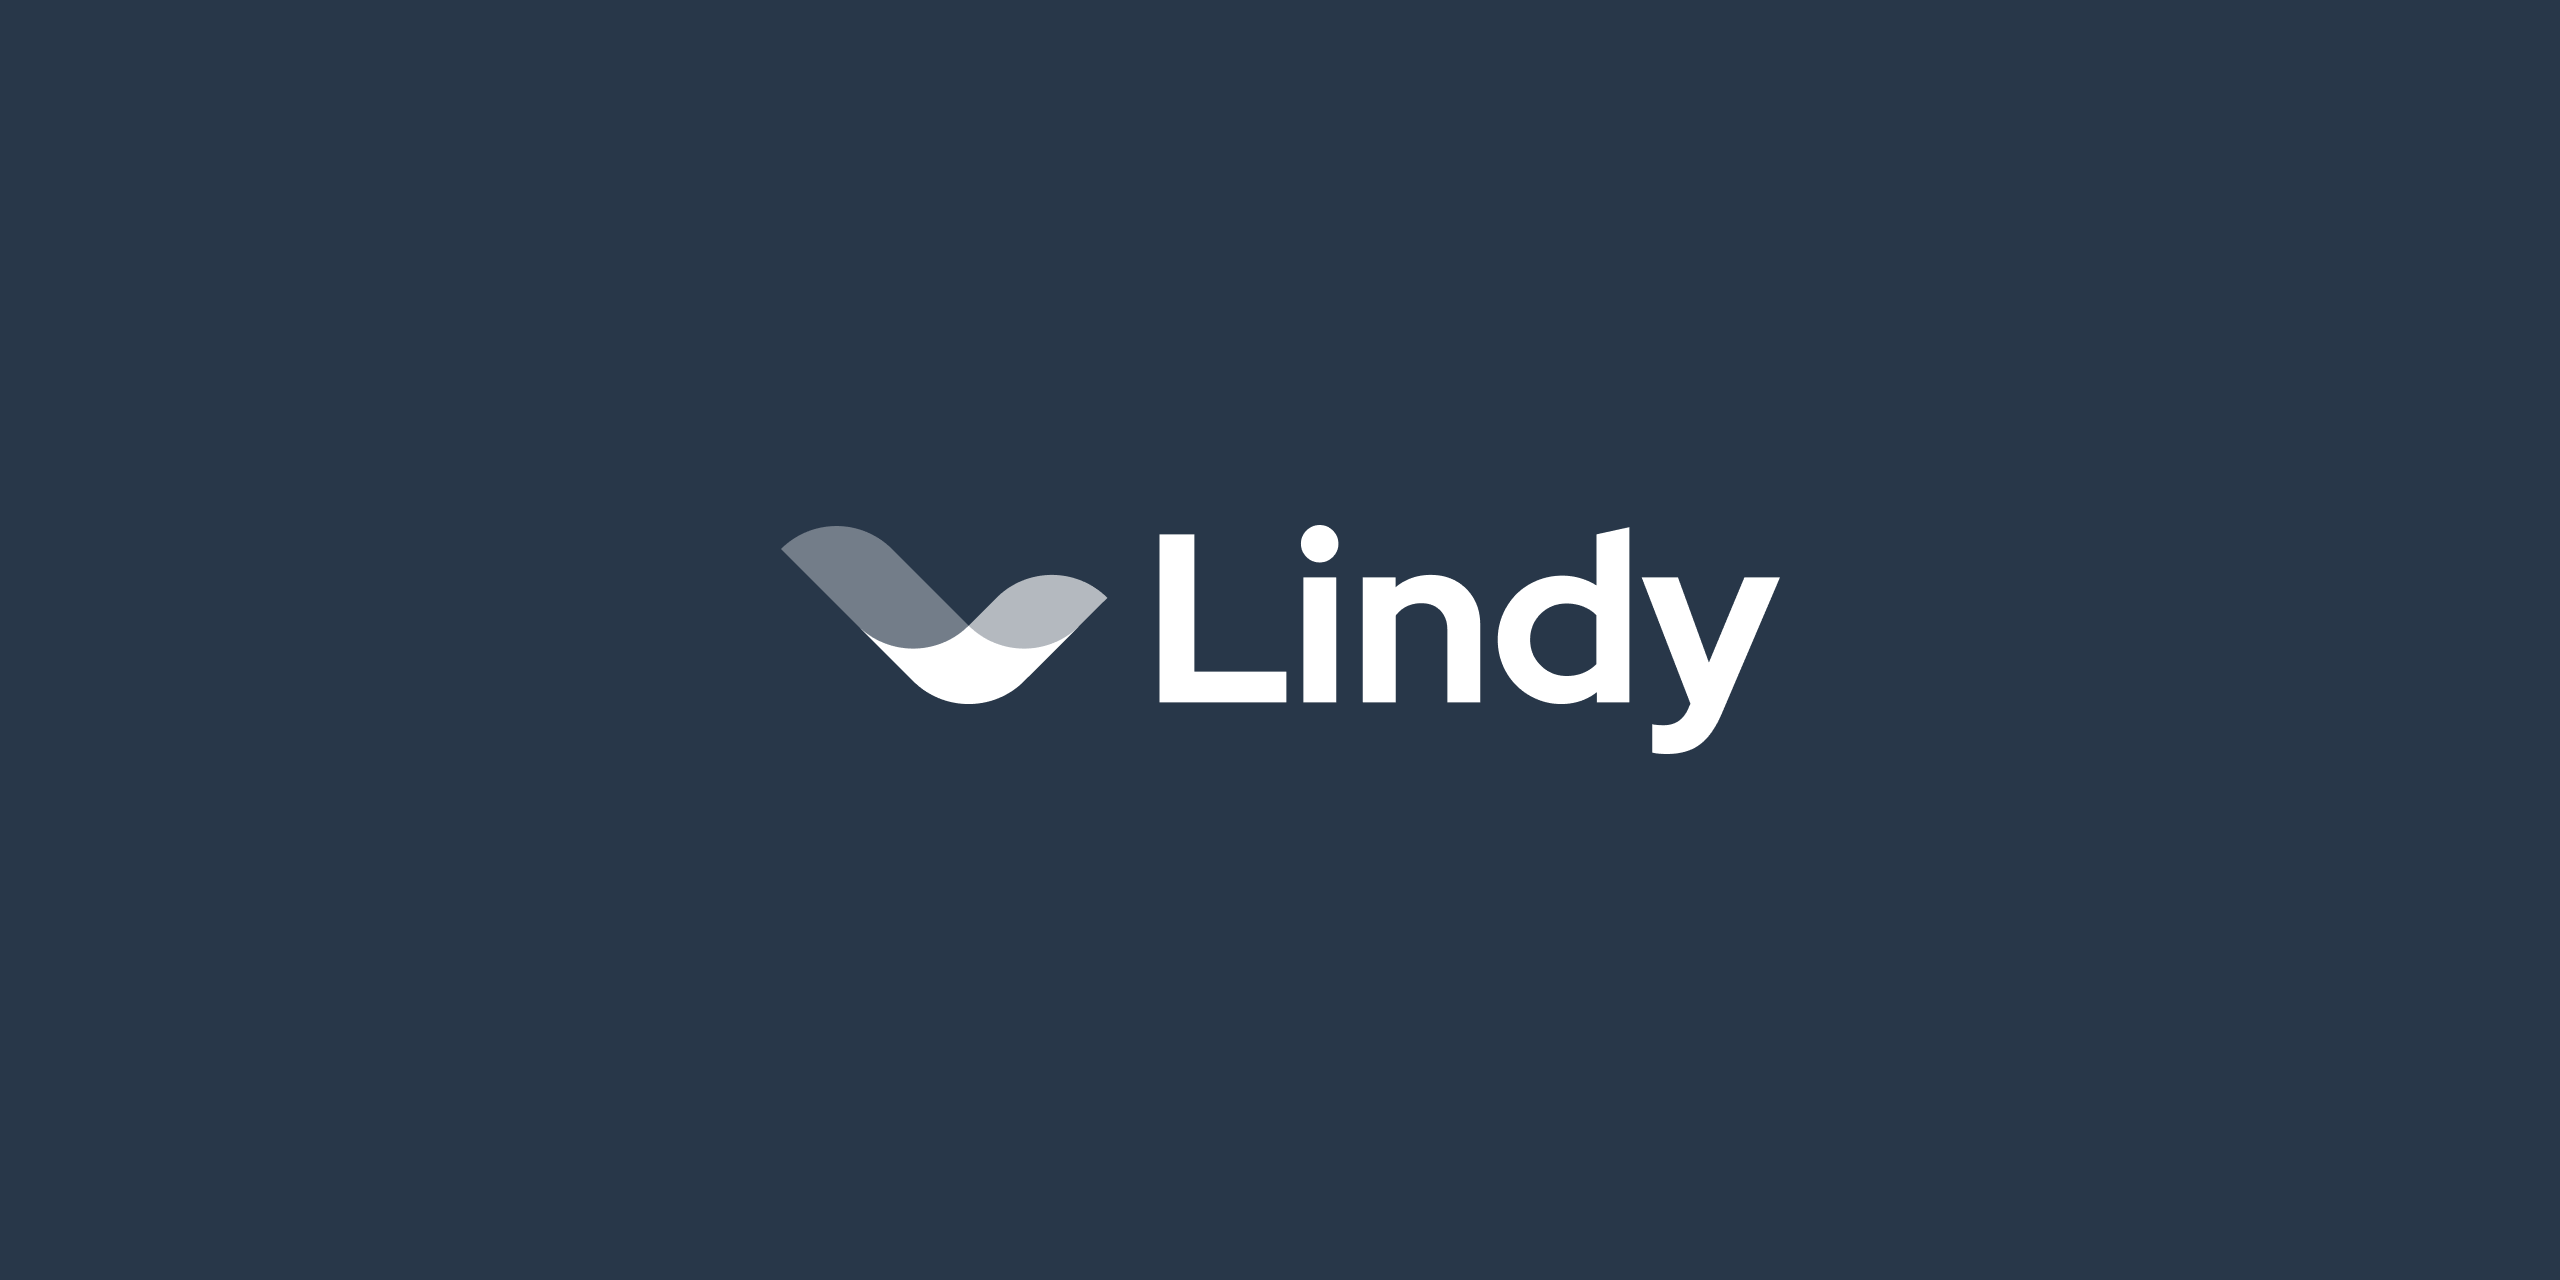 7-Lindy-Logo-Design-by-Brandforma-Bohdan-Harbaruk